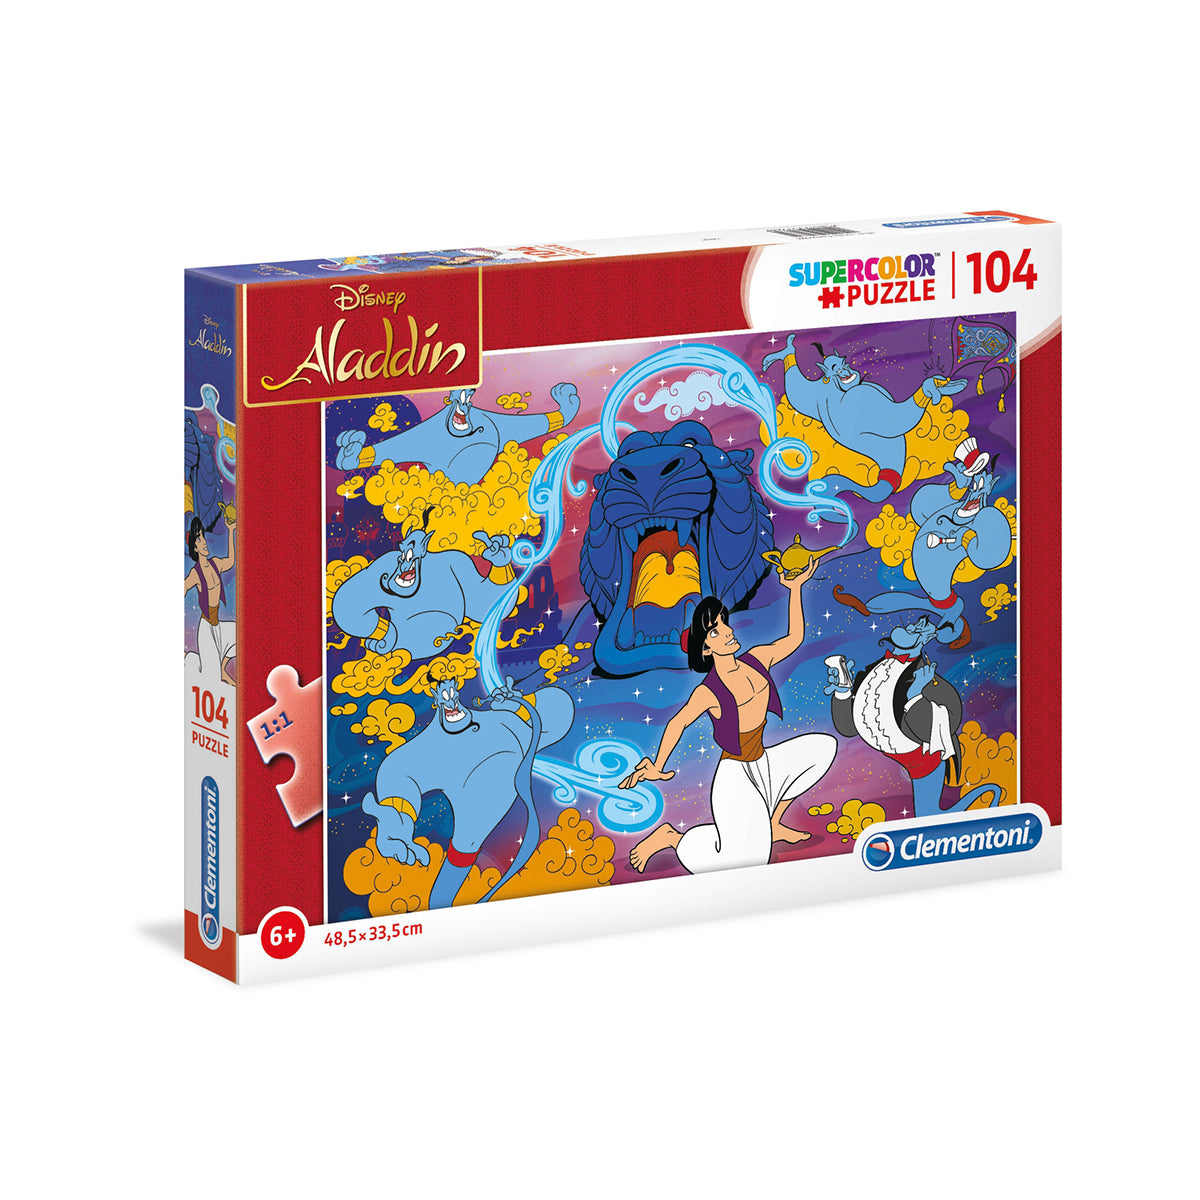 Clementoni - Disney Aladdin -104 Pcs - Supercolor Puzzle